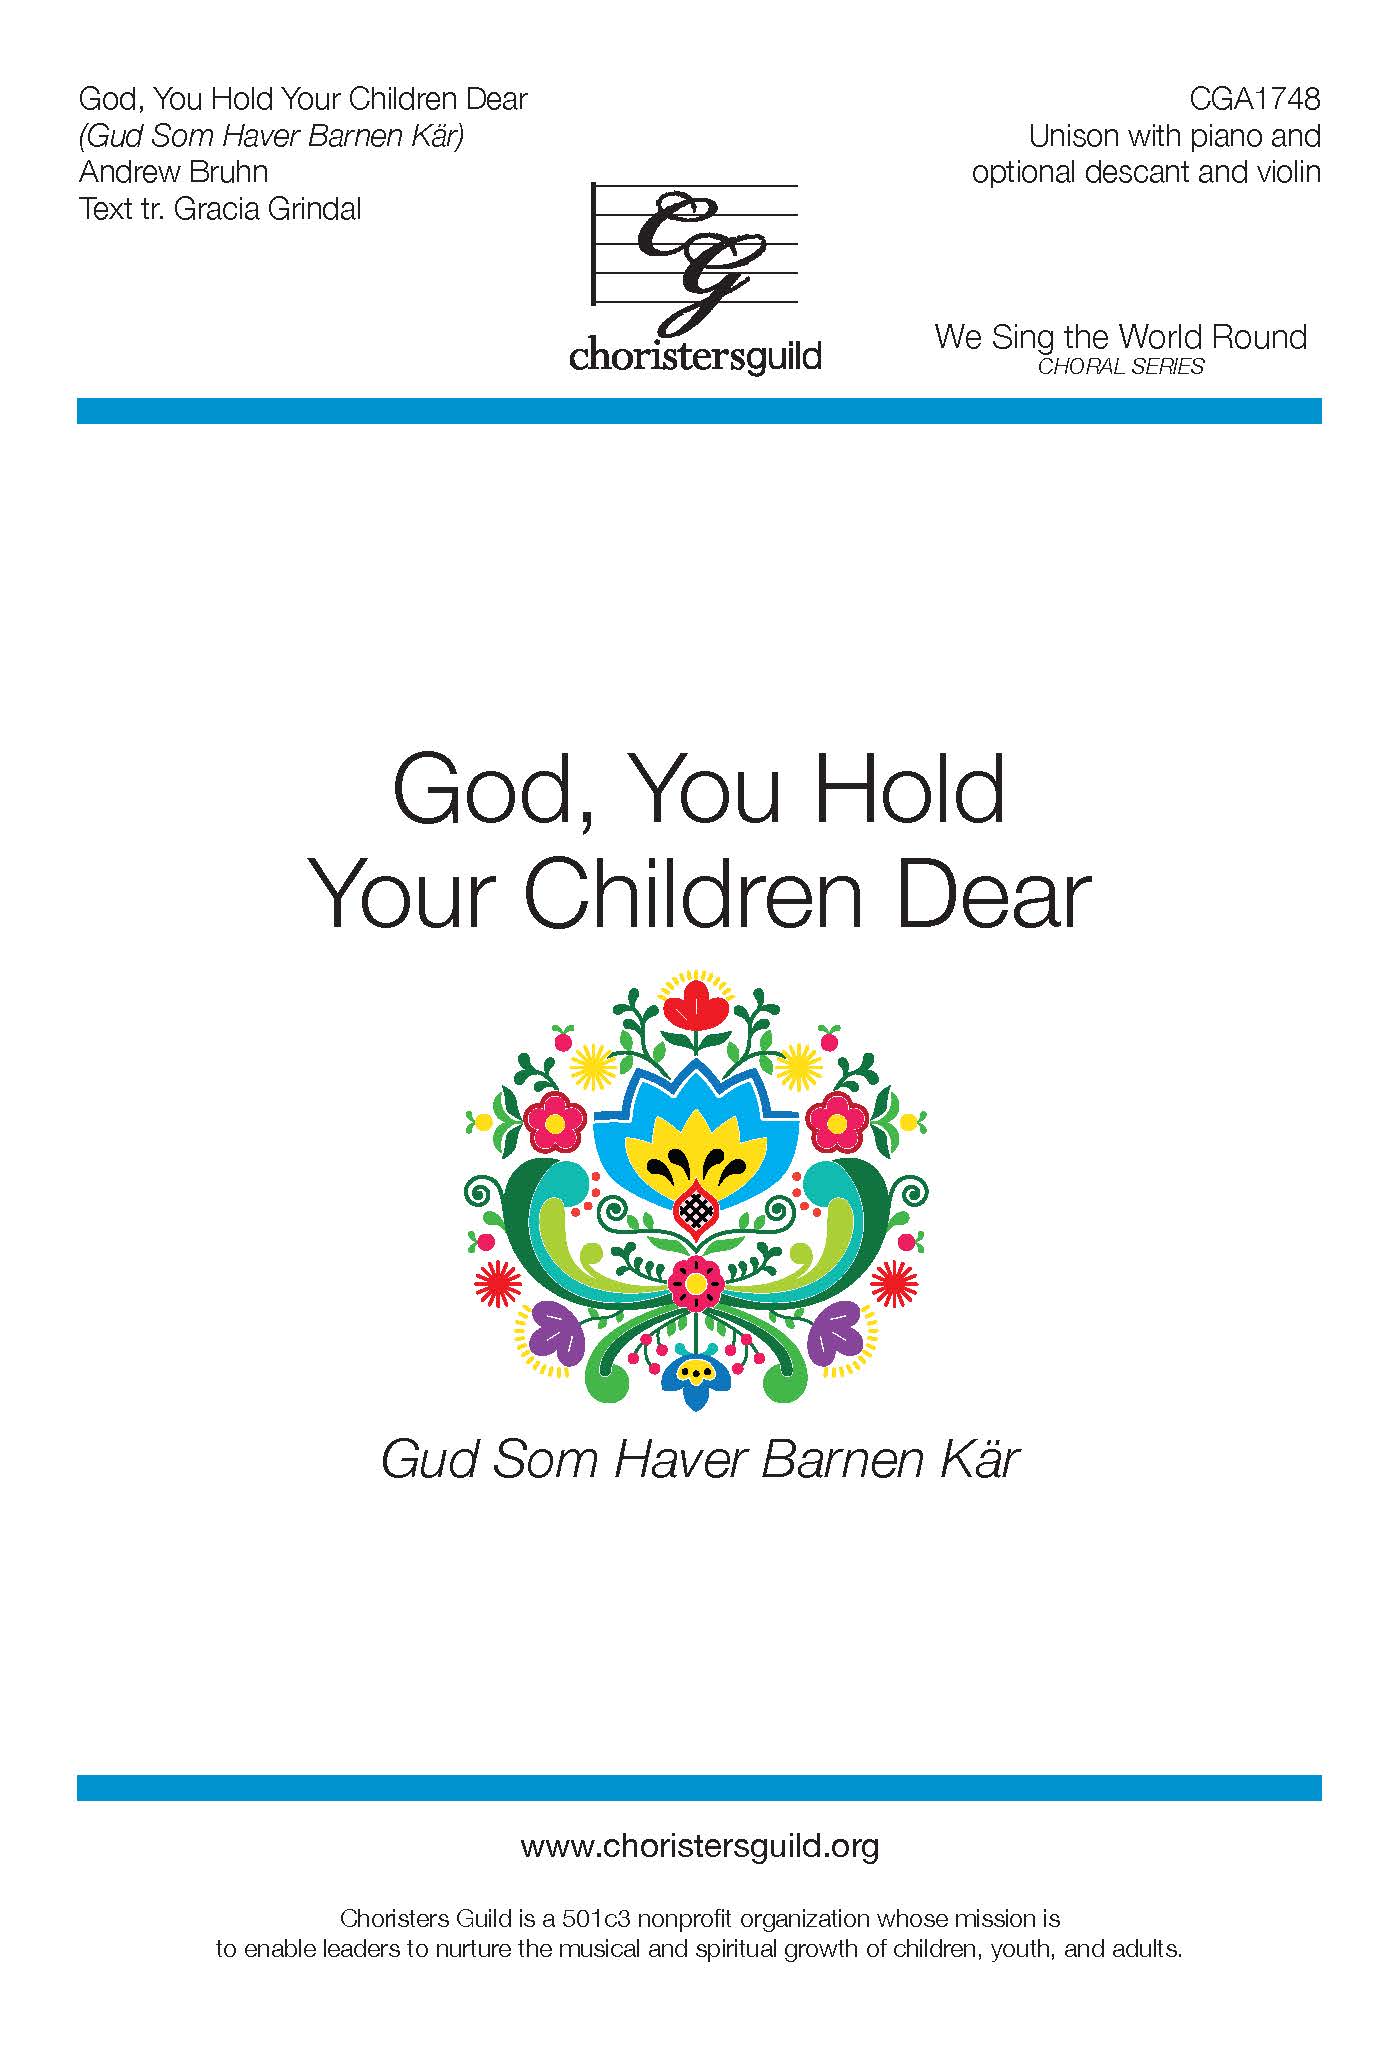 God, You Hold Your Children Dear (Gud Som Haver Barnen Kar) - Unison